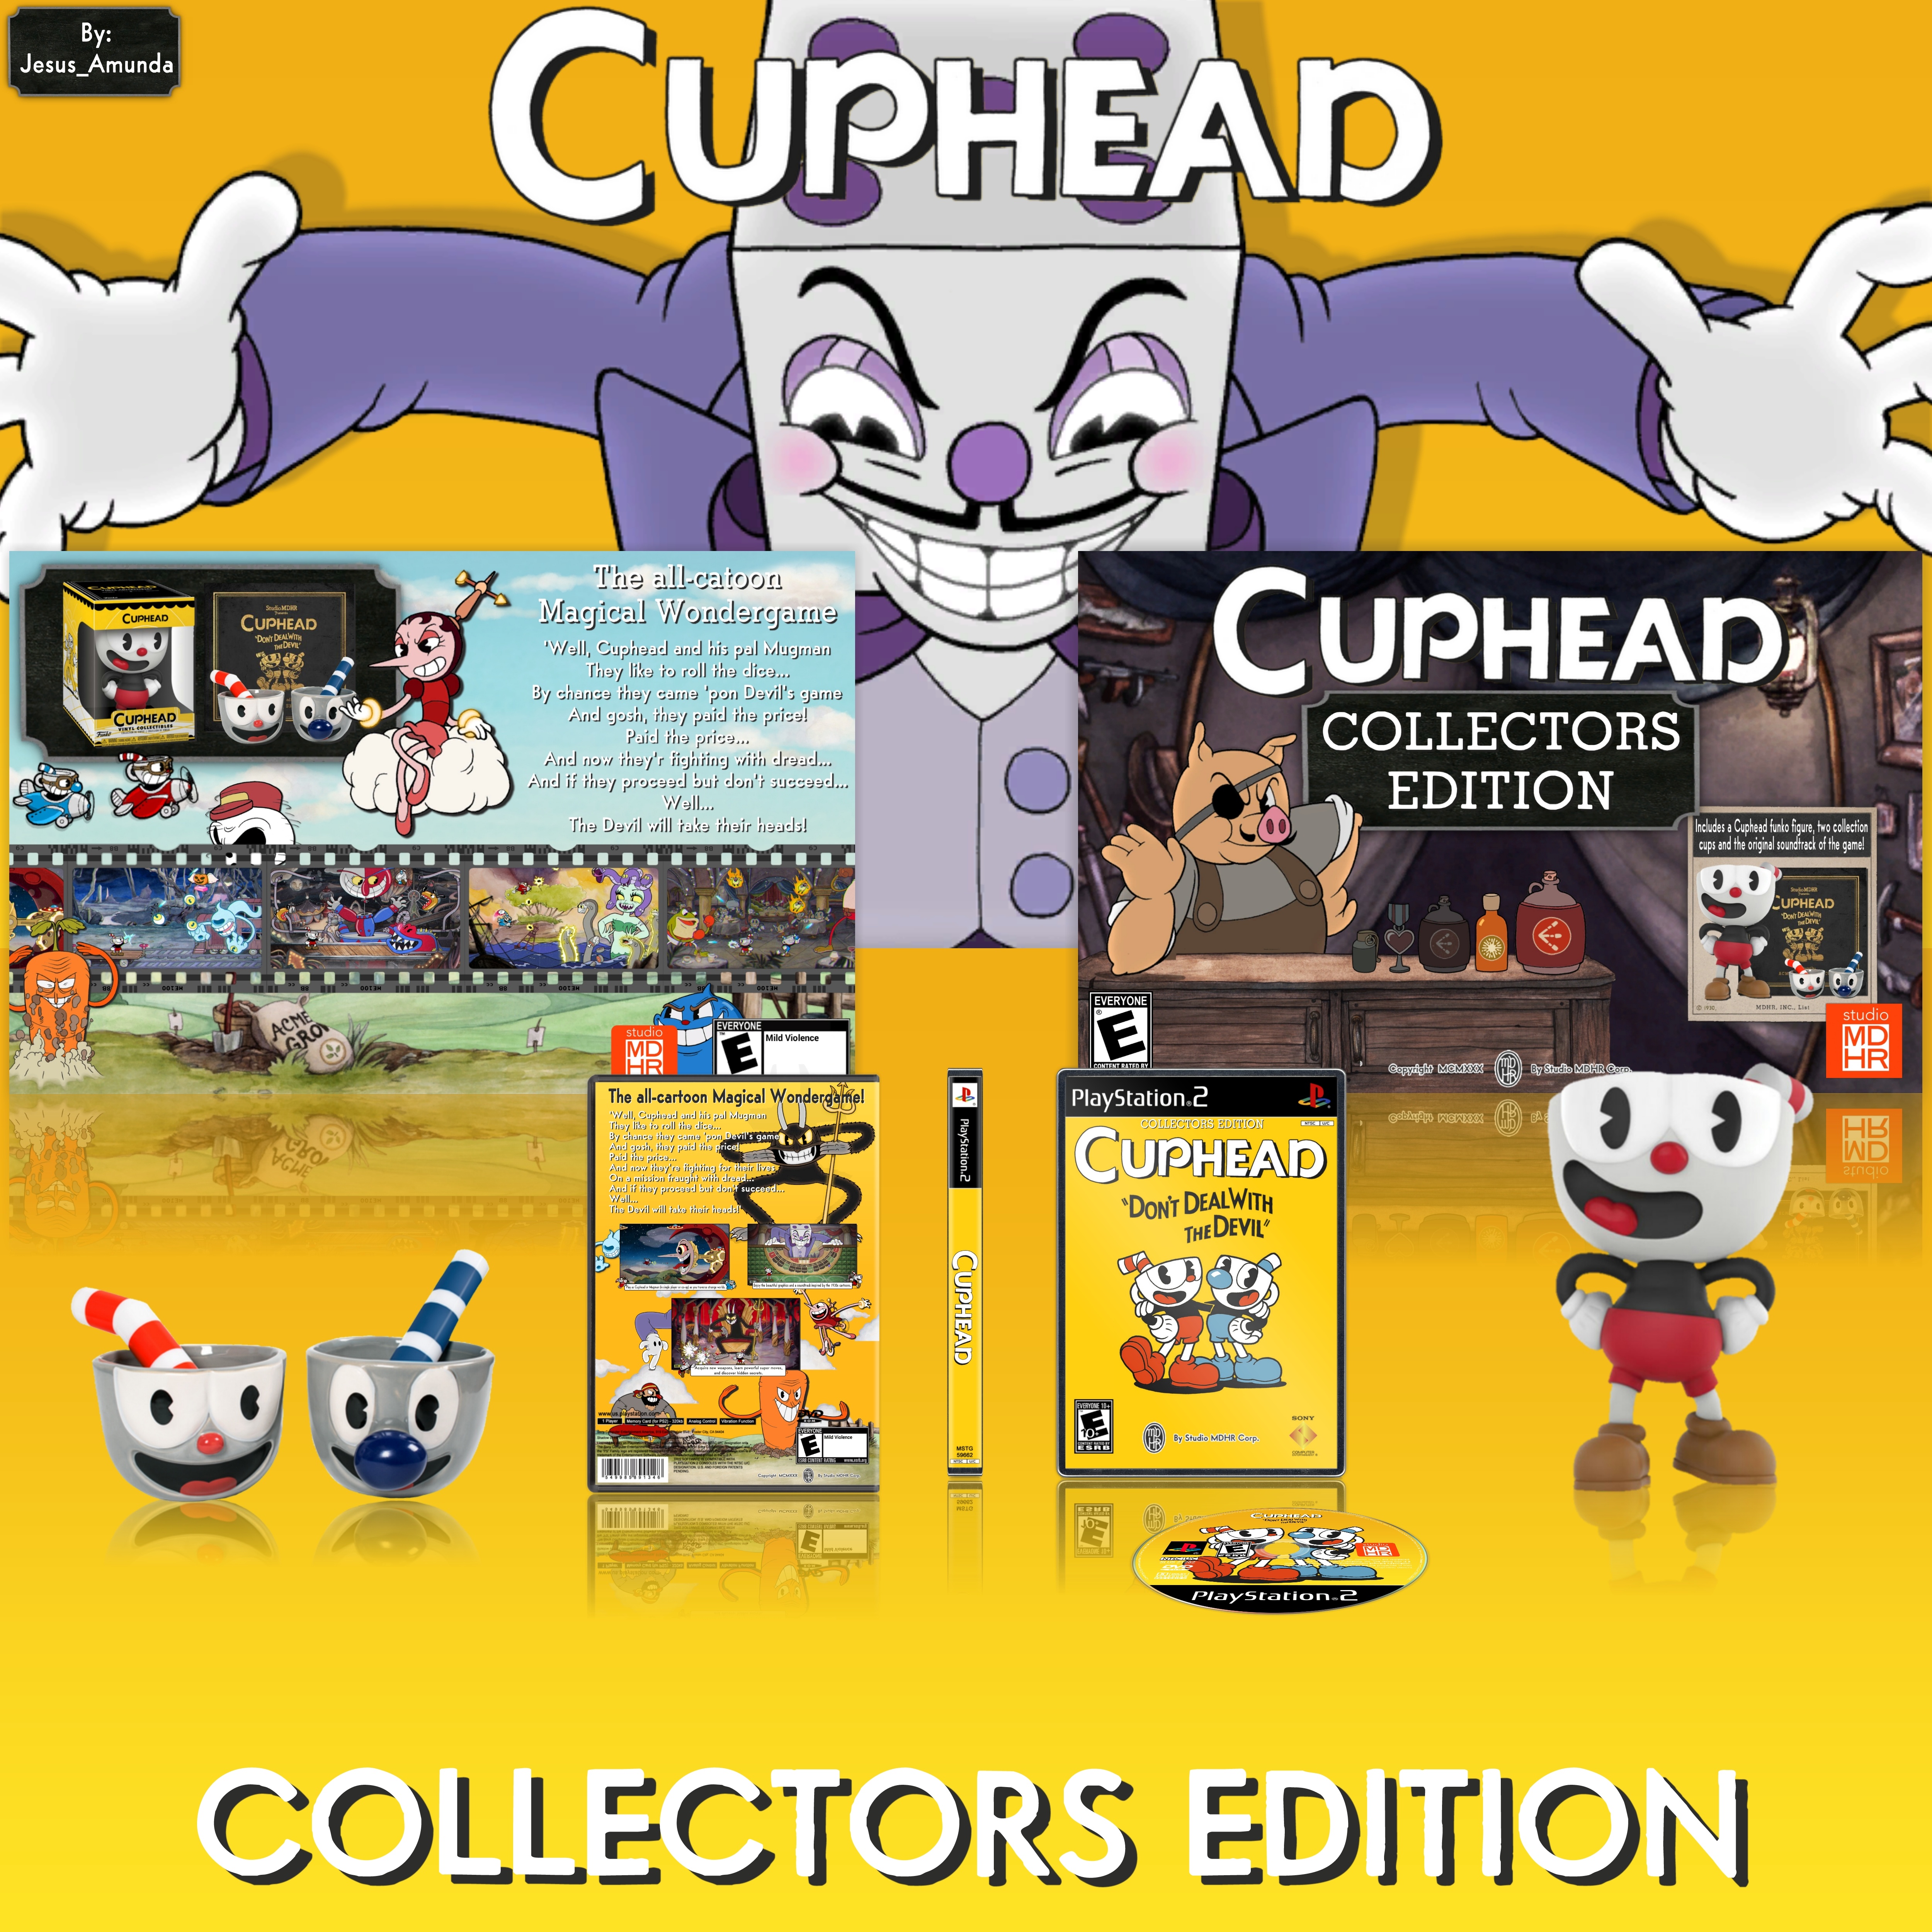 Cuphead Collectors Edition box cover